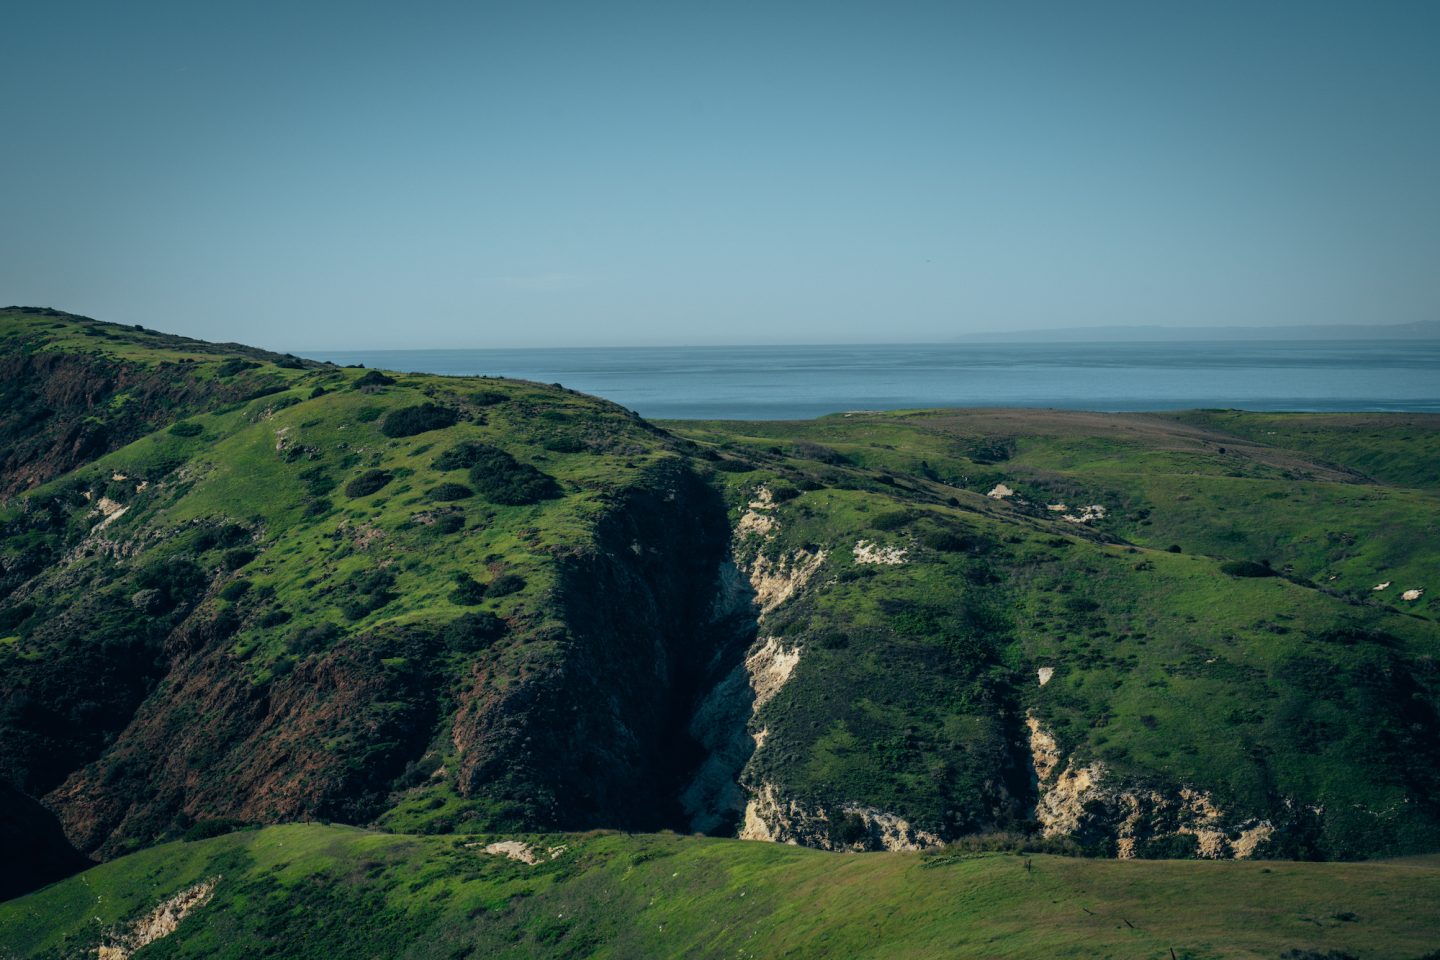 View of scorpion Canyon - Santa Cruz Island